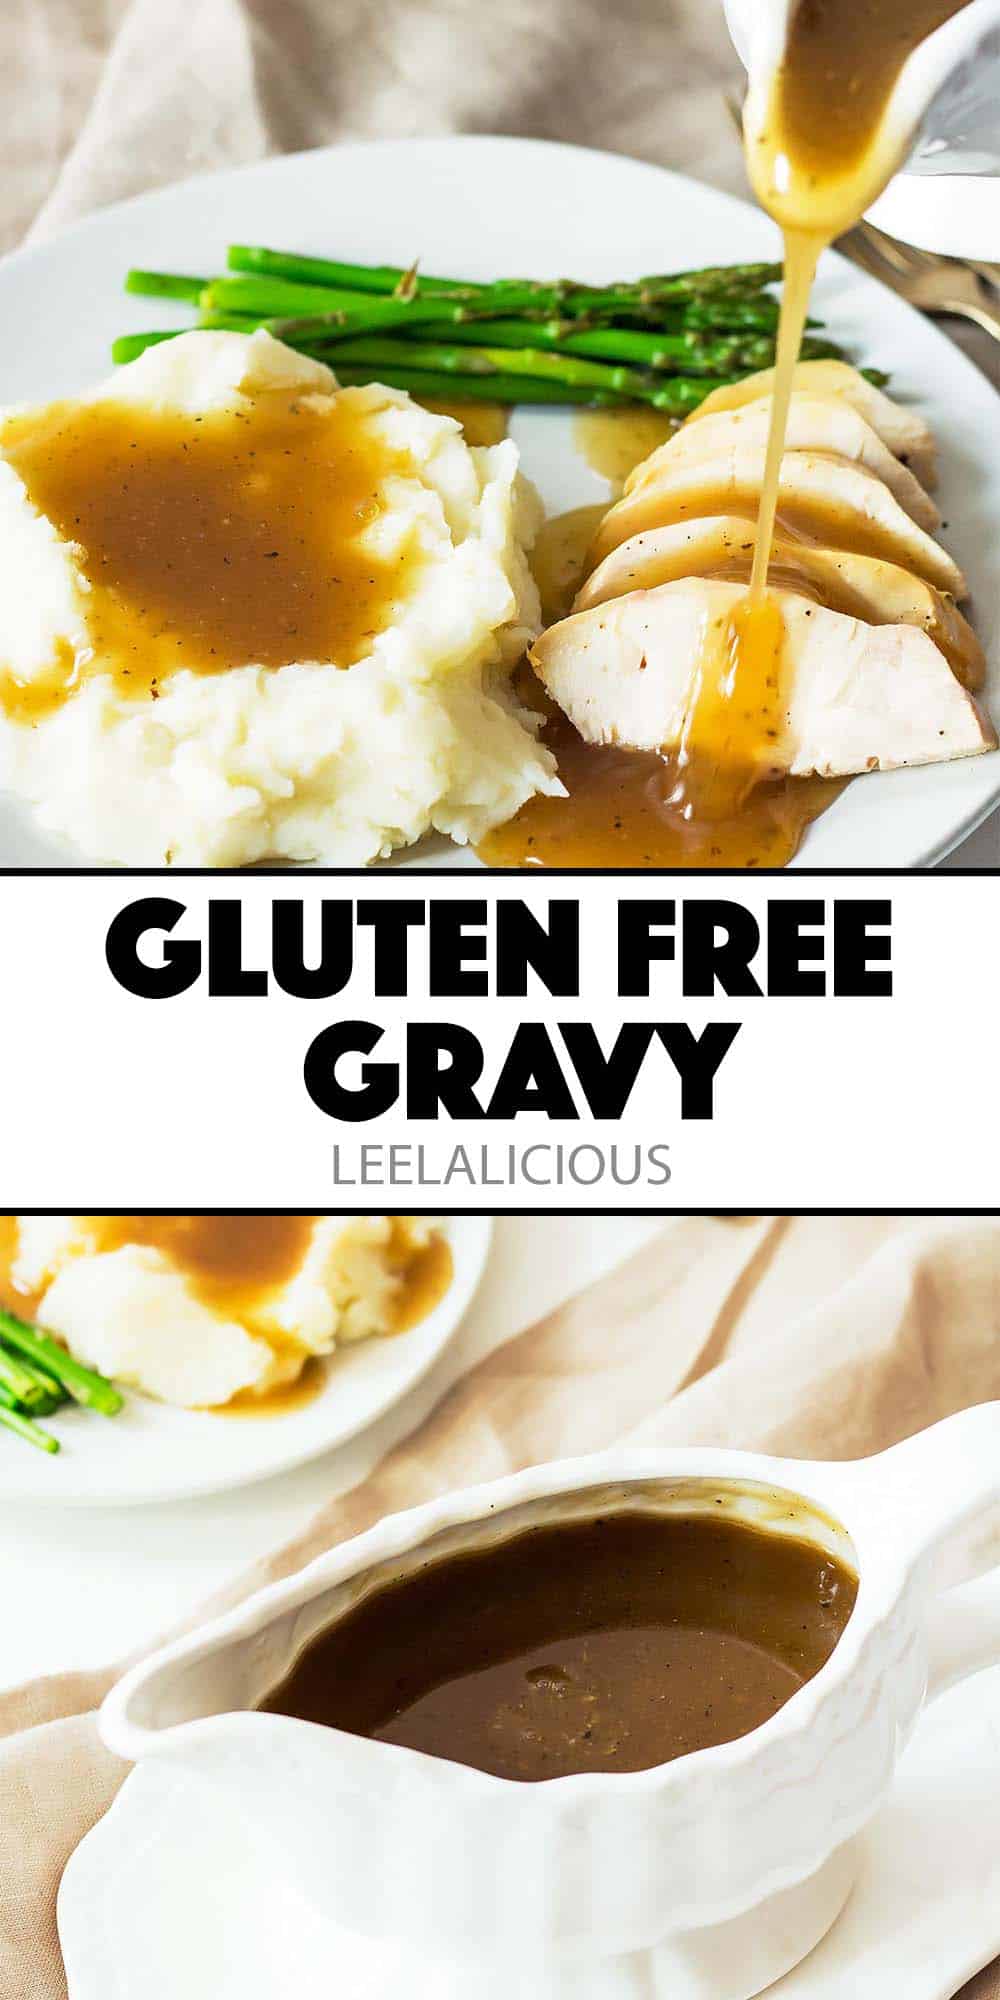 gluten free gravy on mashed potatoes, turkey and in gravy boat